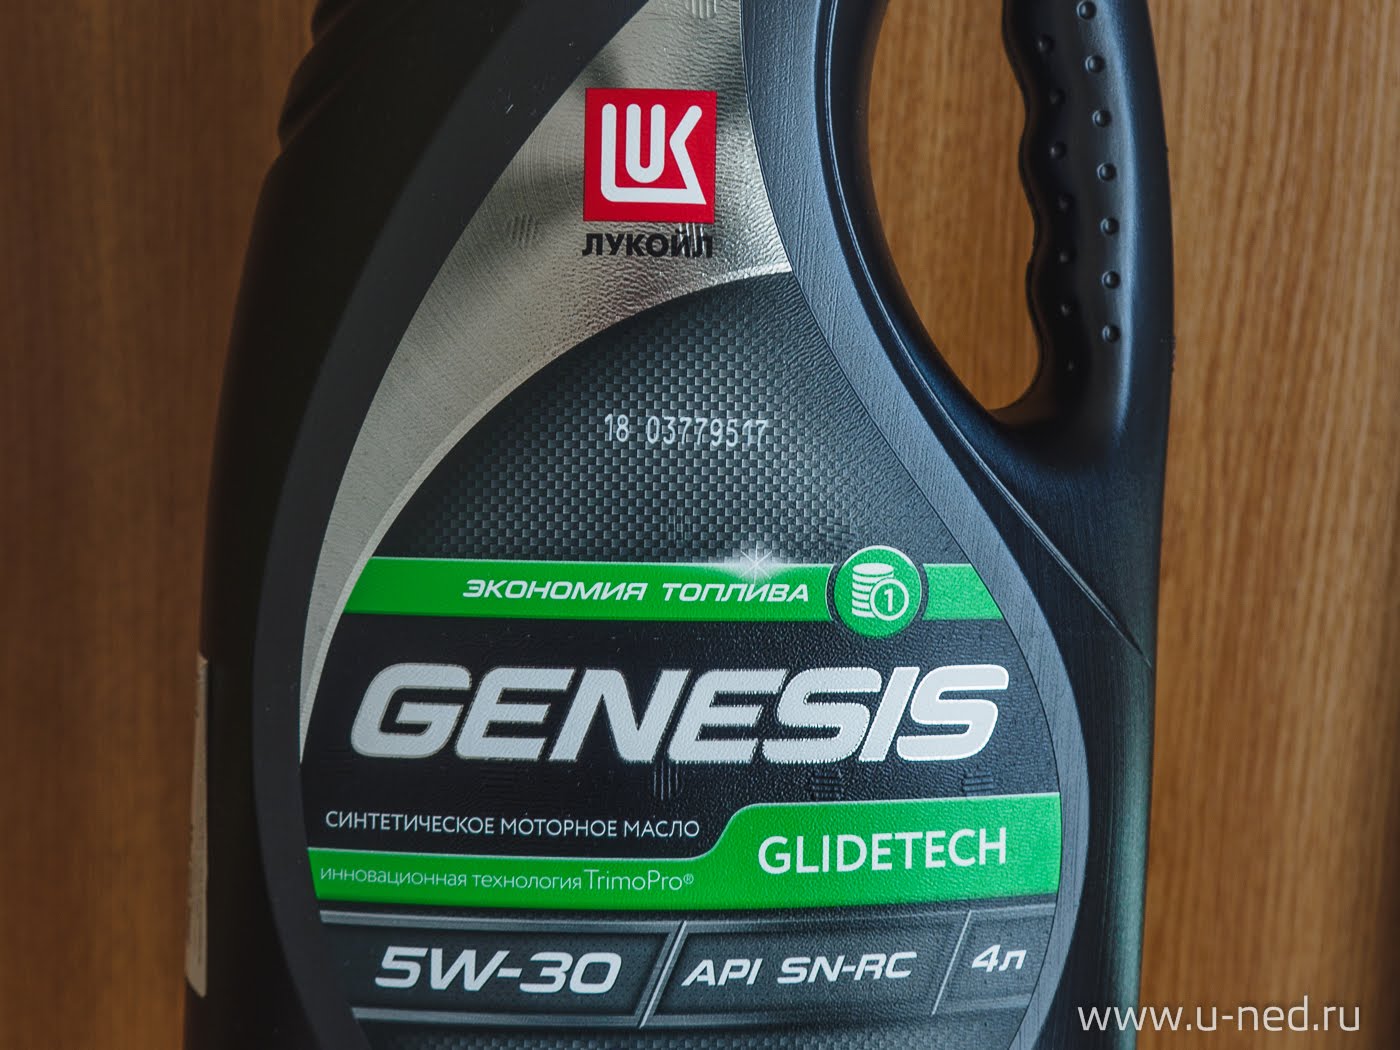 Проверить масло лукойл по коду. Lukoil Genesis glidetech 5w-30. Lukoil Genesis glidetech 5w-30 допуски. Лукойл Genesis glidetech.